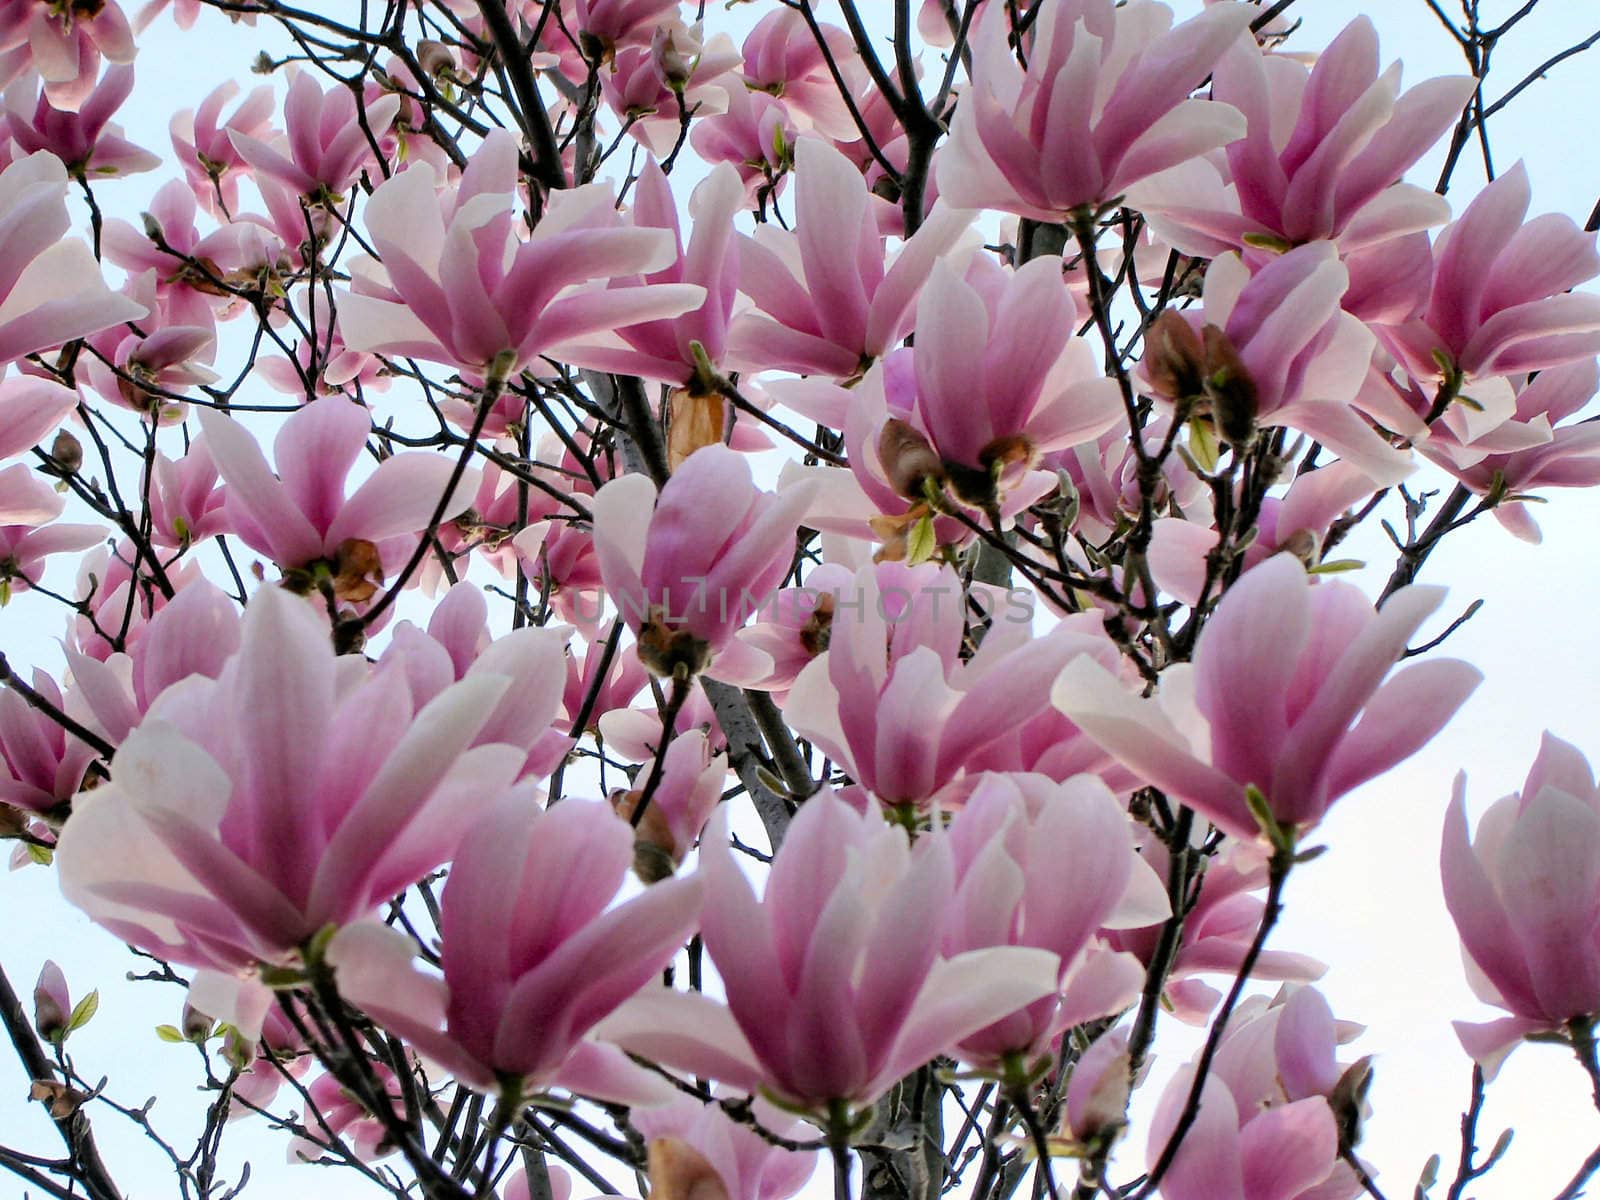 Magnolia by RefocusPhoto